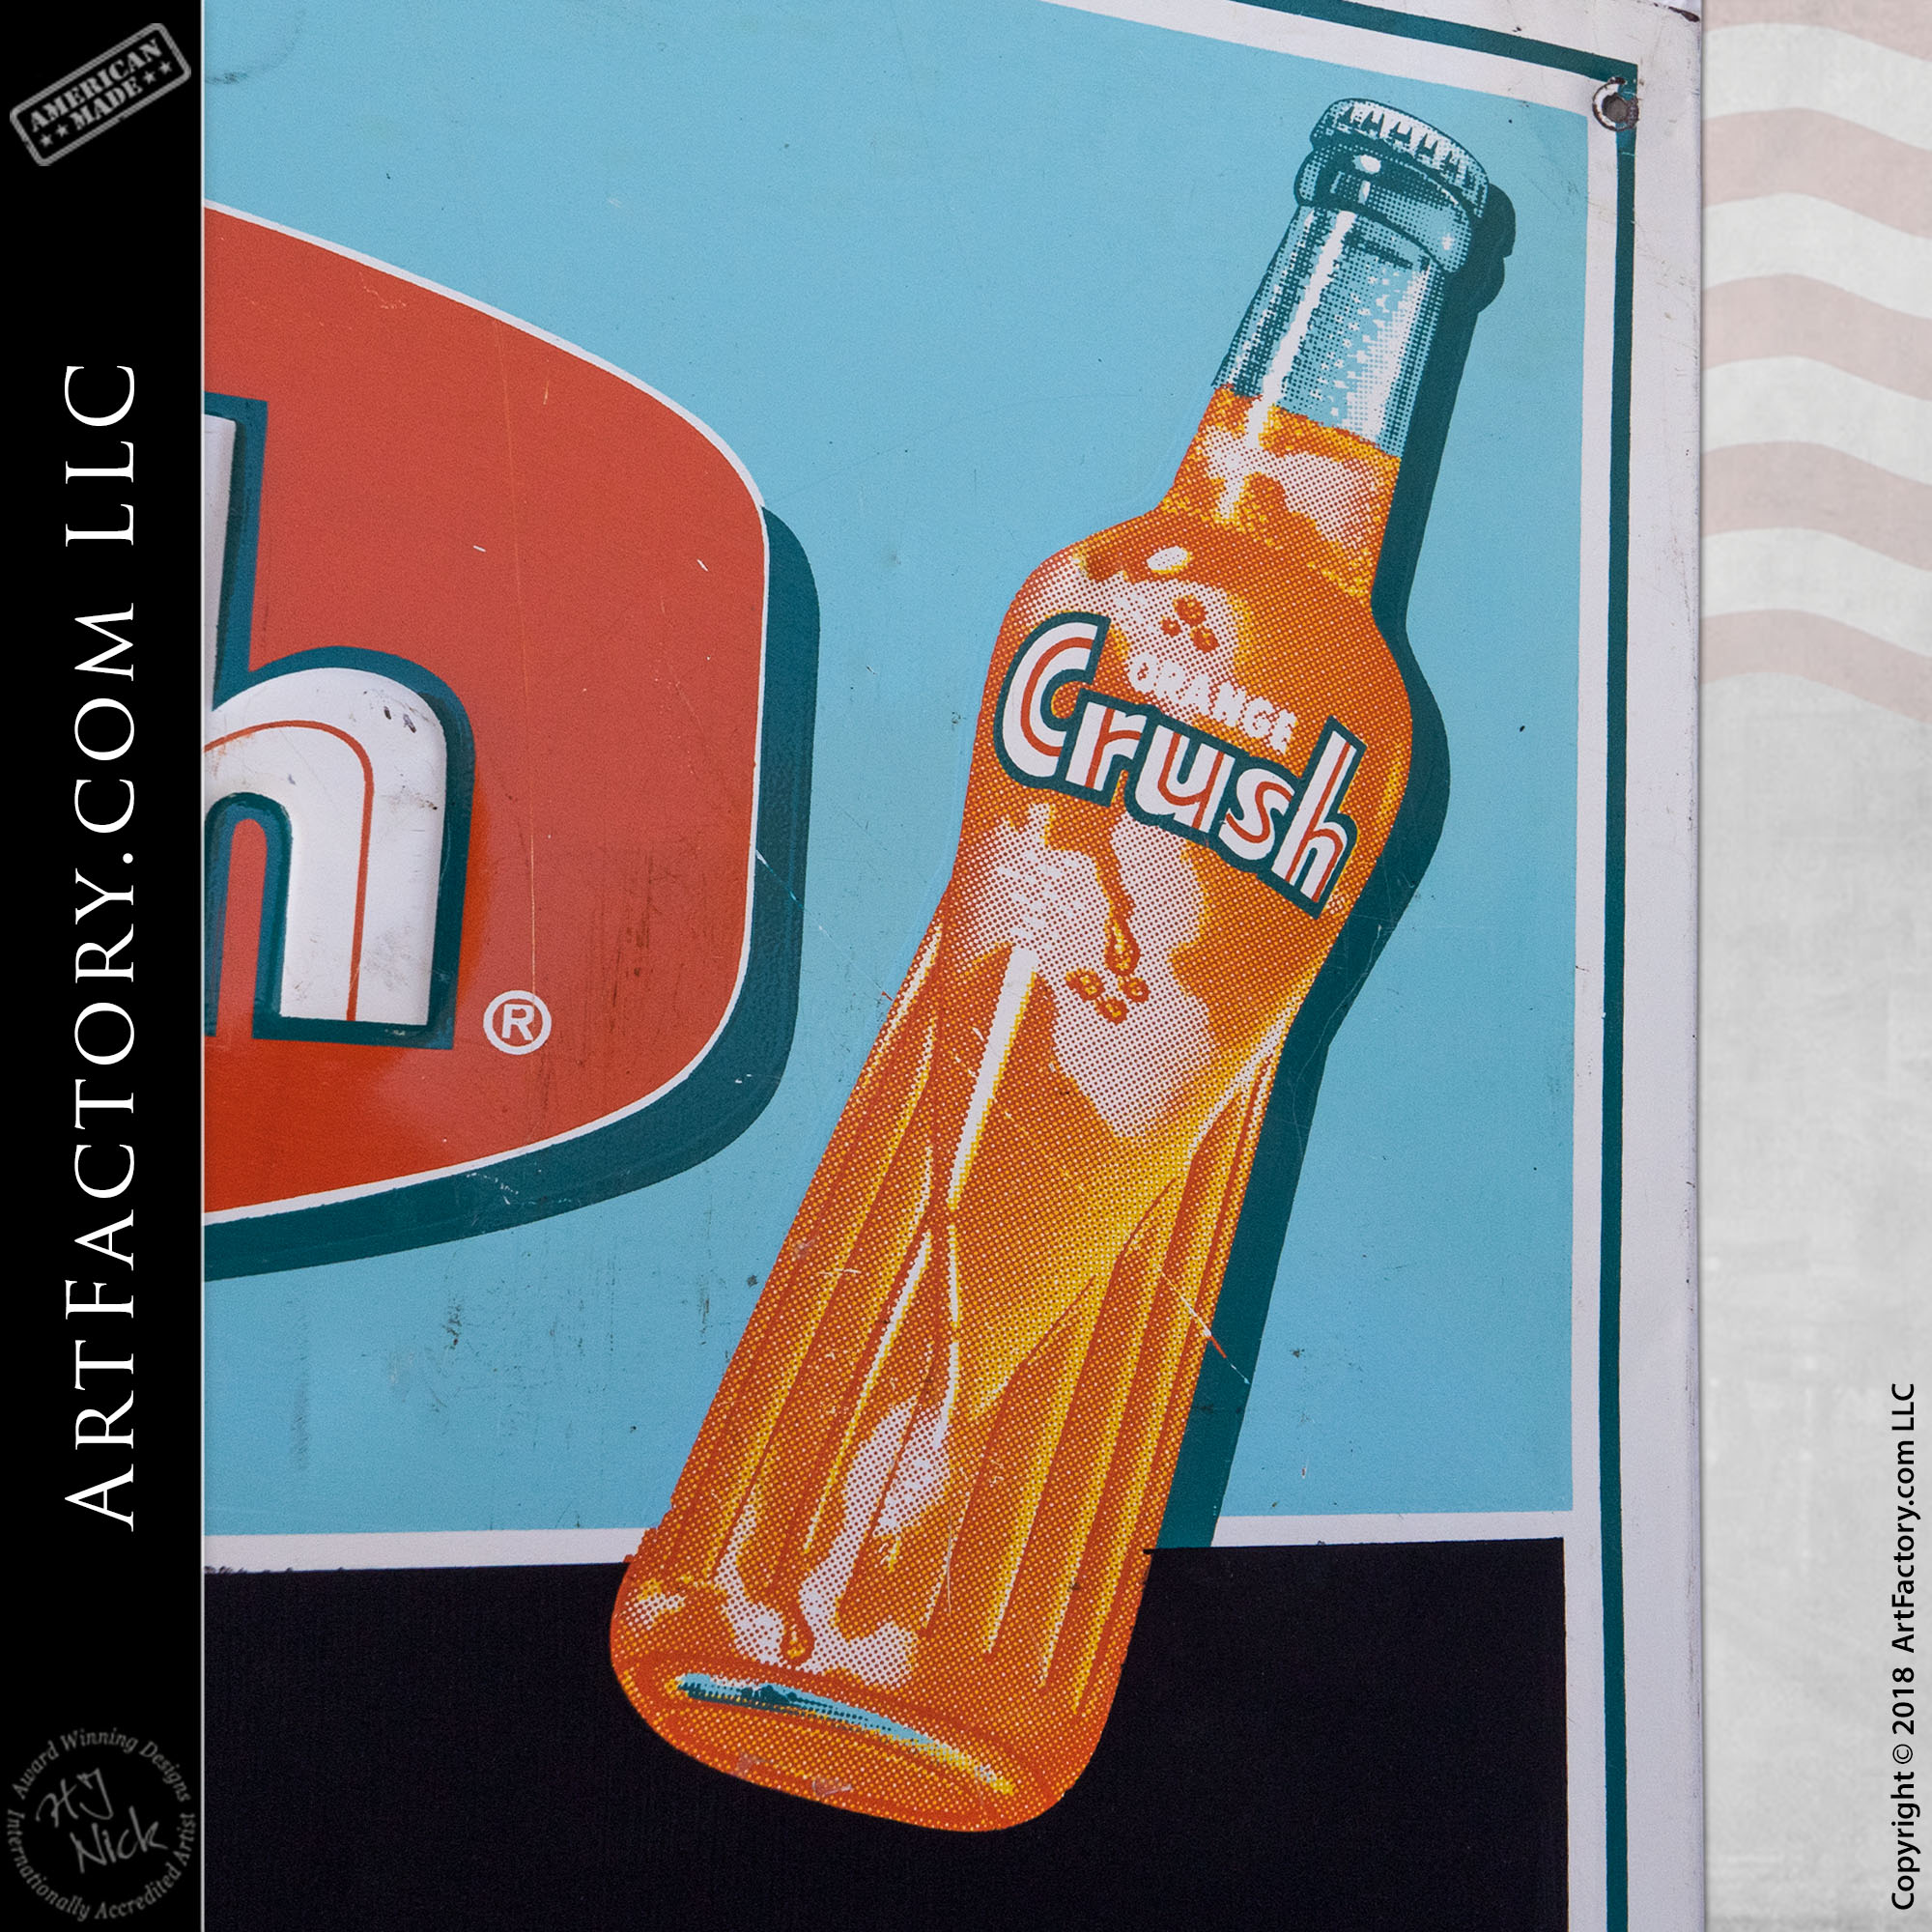 Vintage Orange Crush Chalkboard Sign: Original 1960's Soda Advertising 1960s Soda Advertising